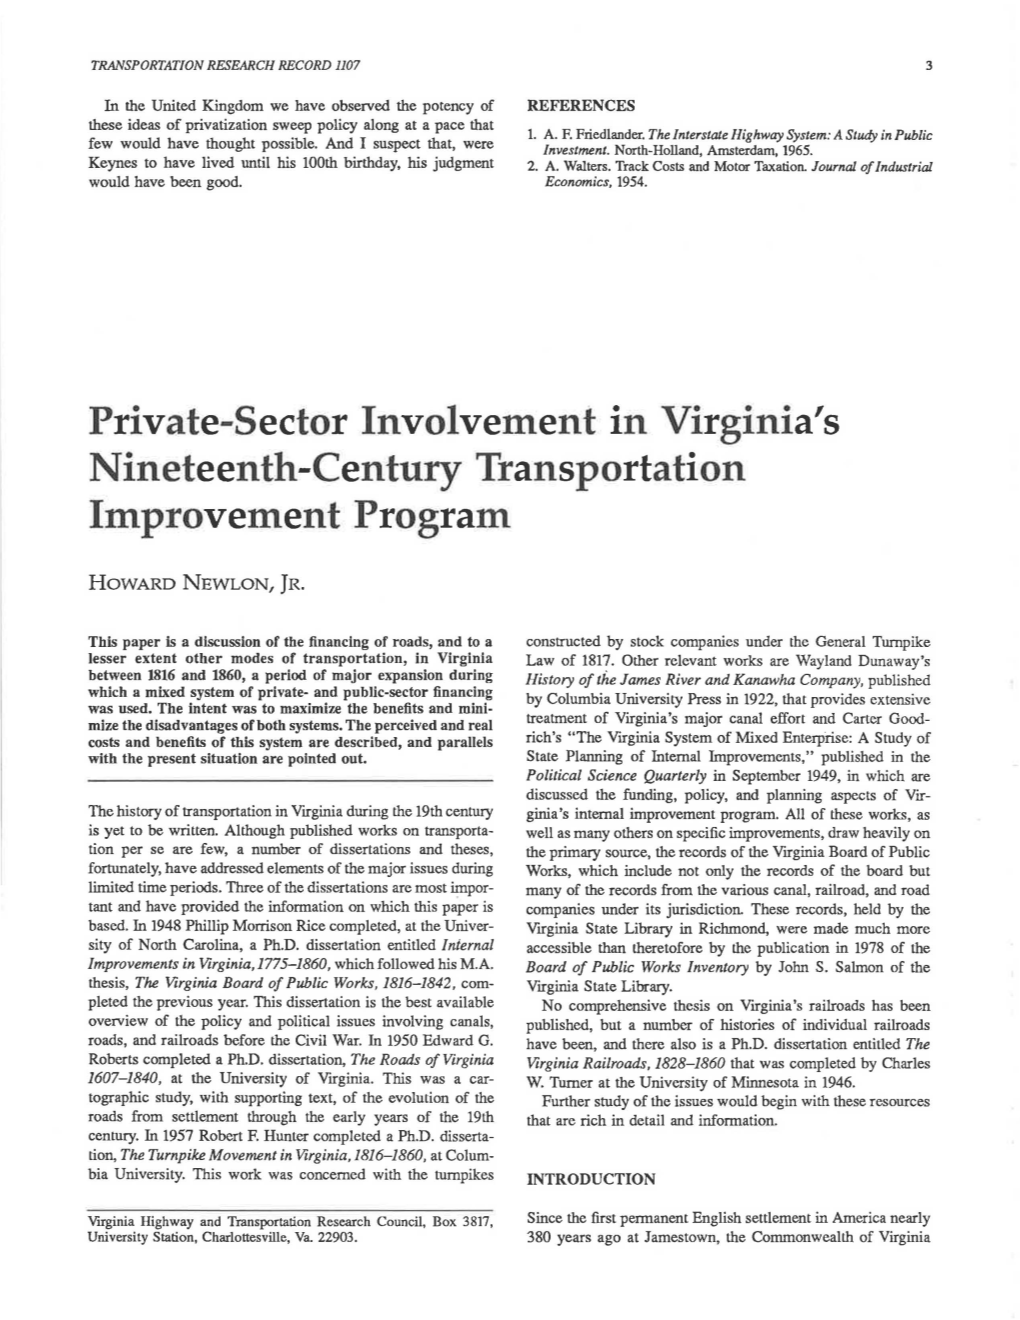 Private-Sector Involvement in Virginia's Nineteenth-Century Transportation Improvement Program